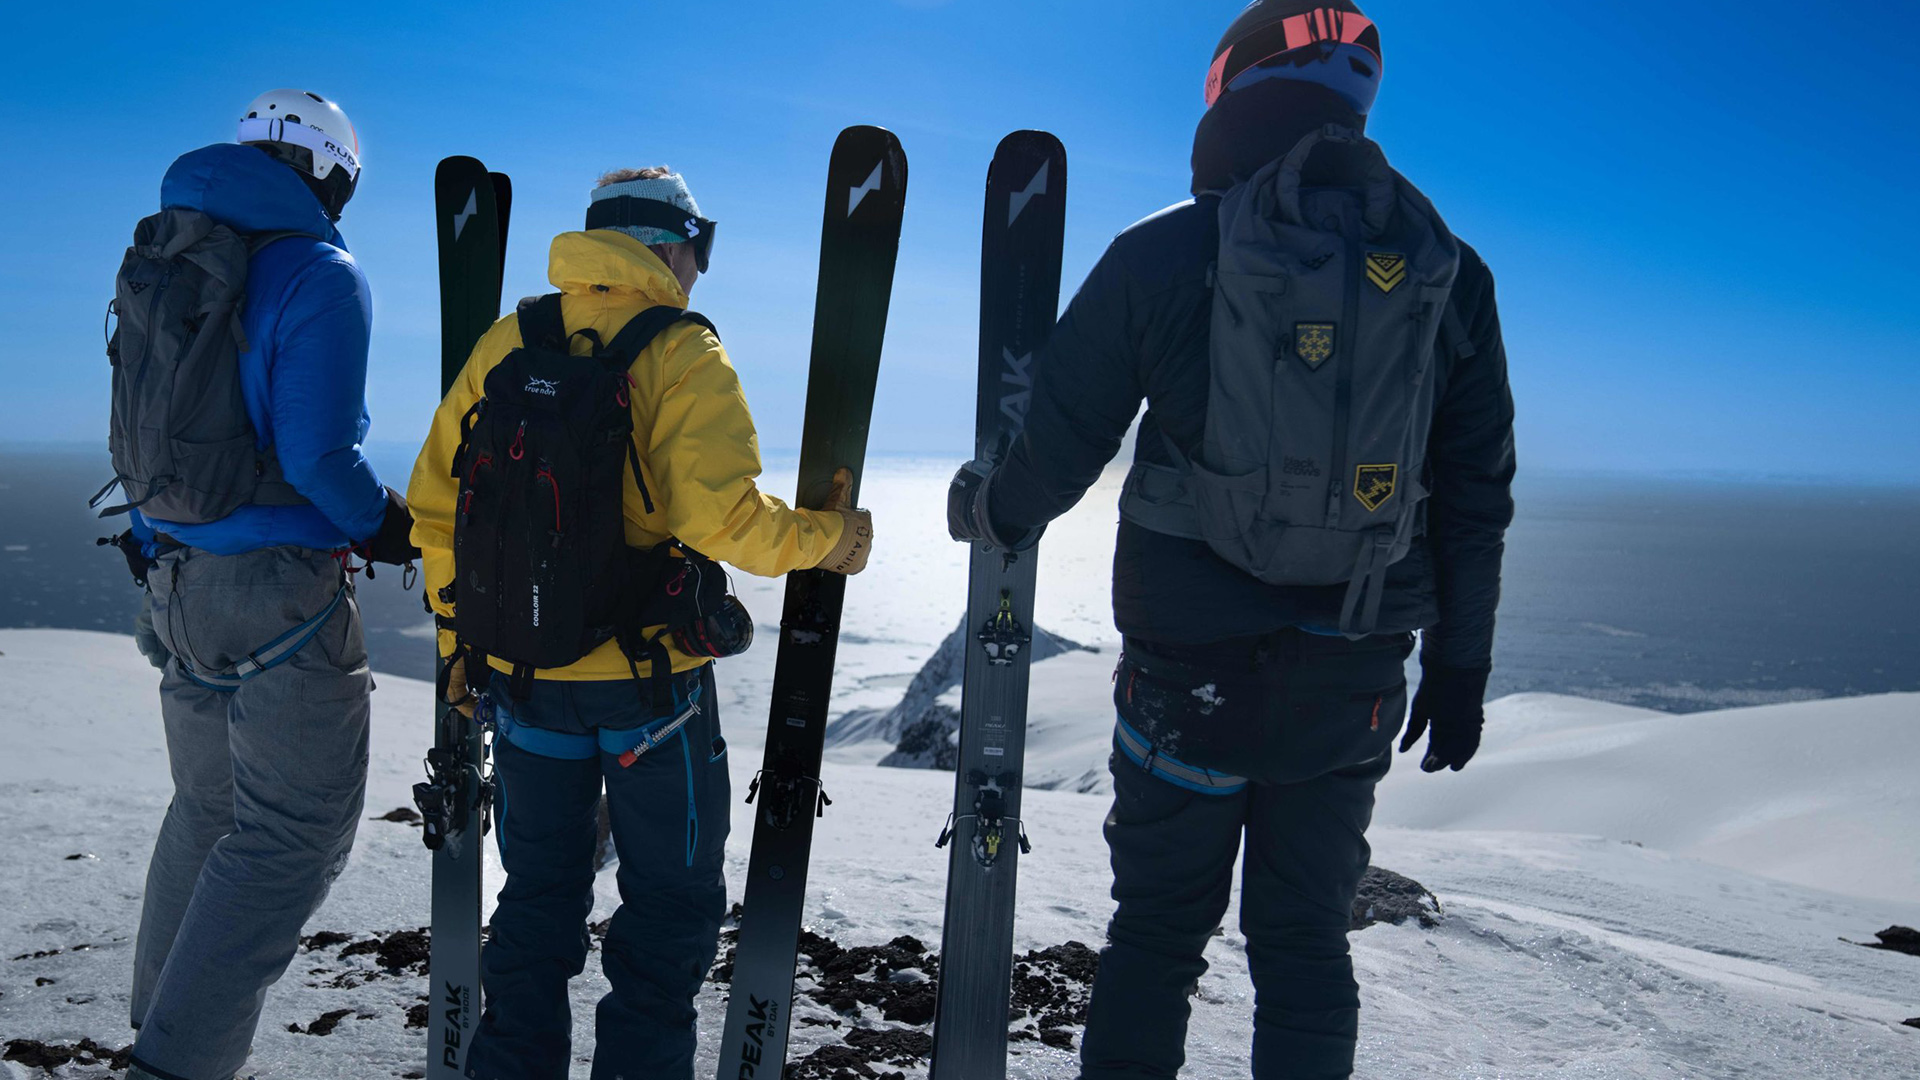 Heli-Skiing Greenland with Chris Davenport